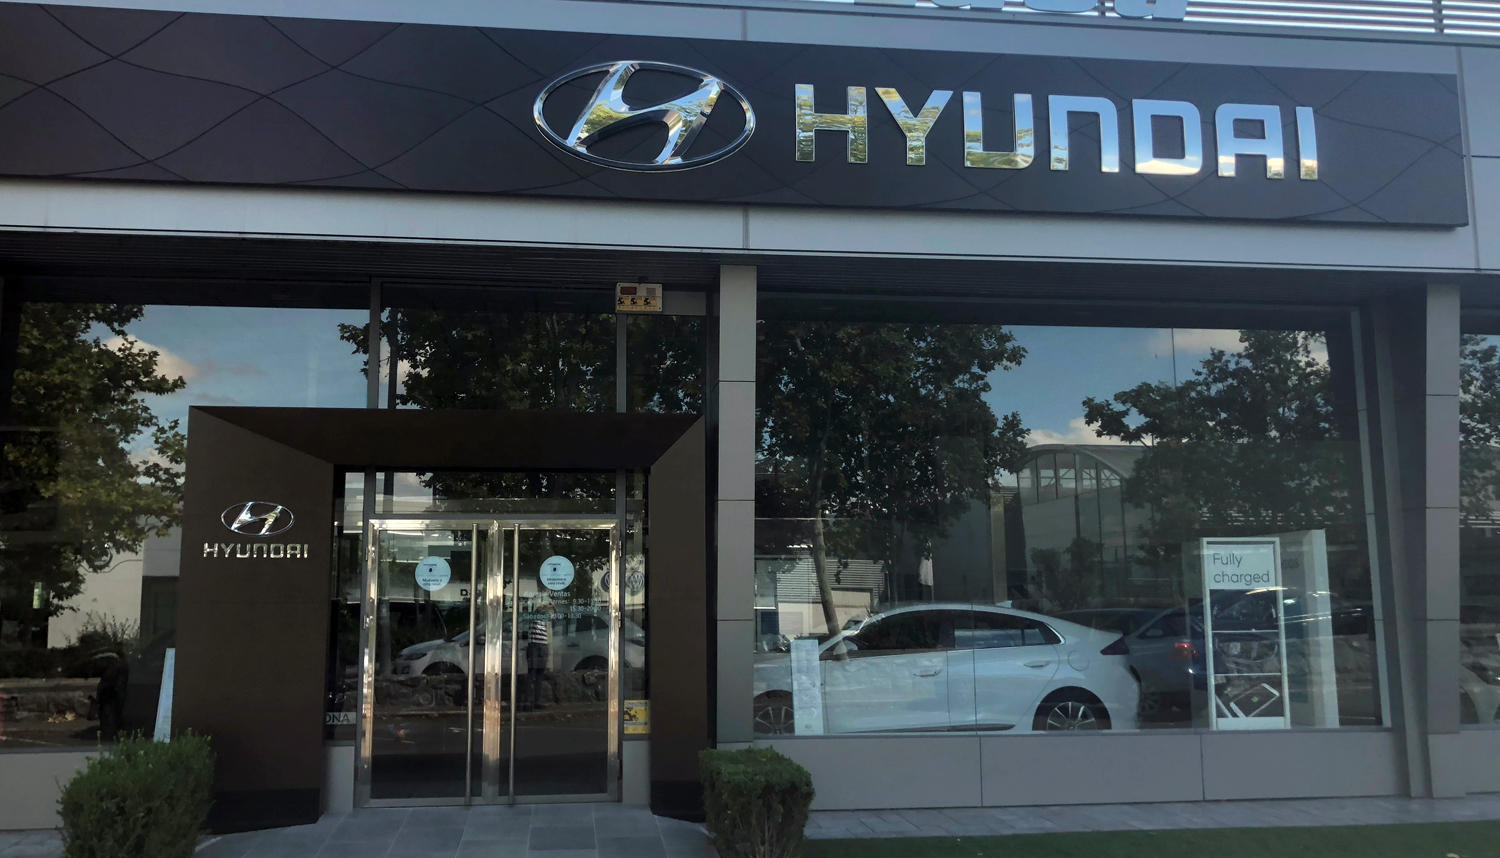 Images Autolasa Hyundai